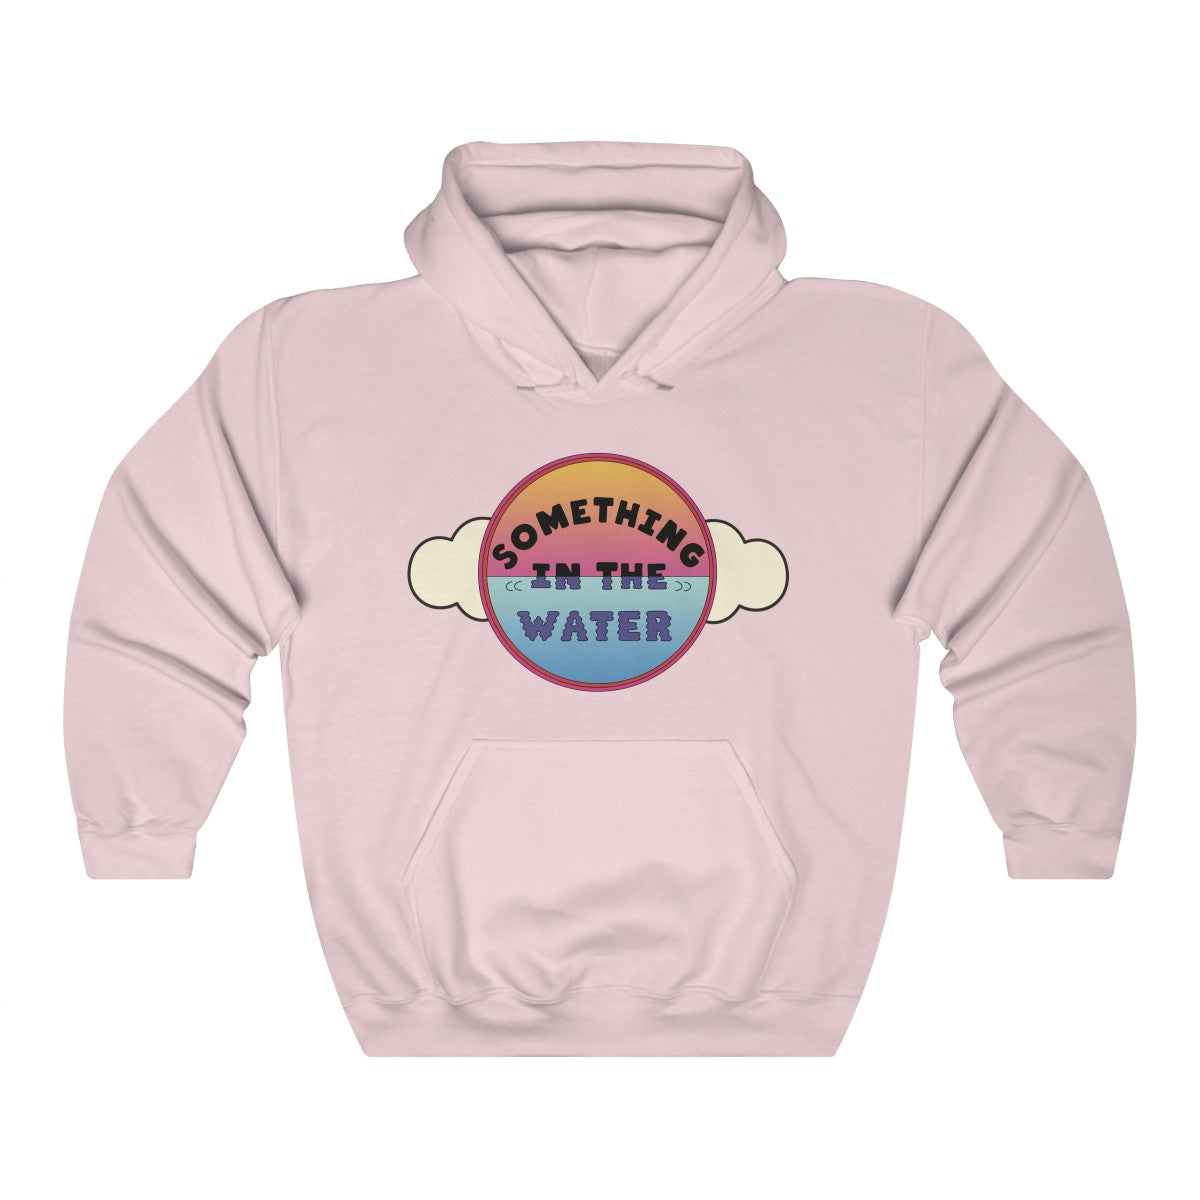 Something in the water Unisex Heavy Blend Hooded Sweatshirt - Pharrell Williams festival merch inspired-Light Pink-S-Archethype